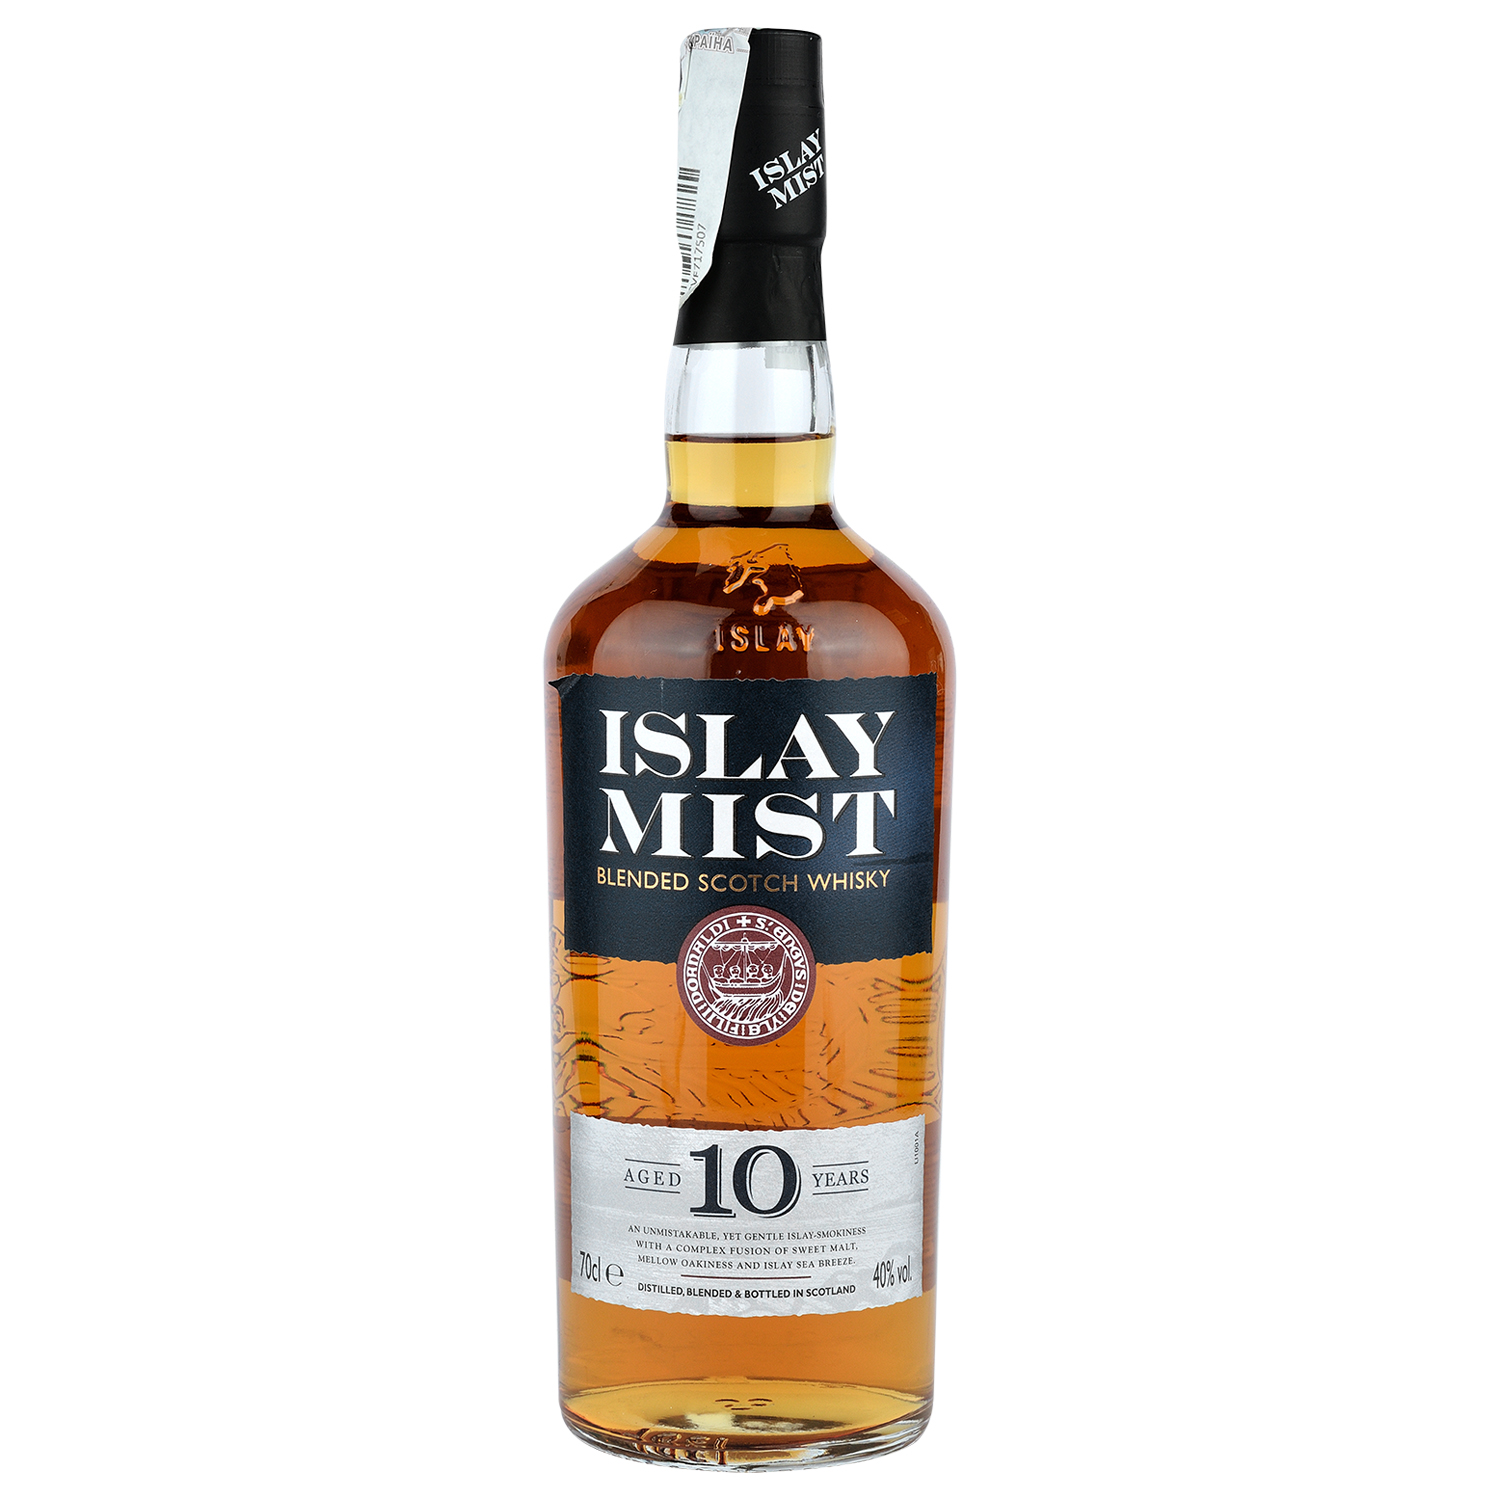 Виски Islay Mist Blended Scotch Whisky 10 yo, в подарочной упаковке, 40%, 0,7 л - фото 3